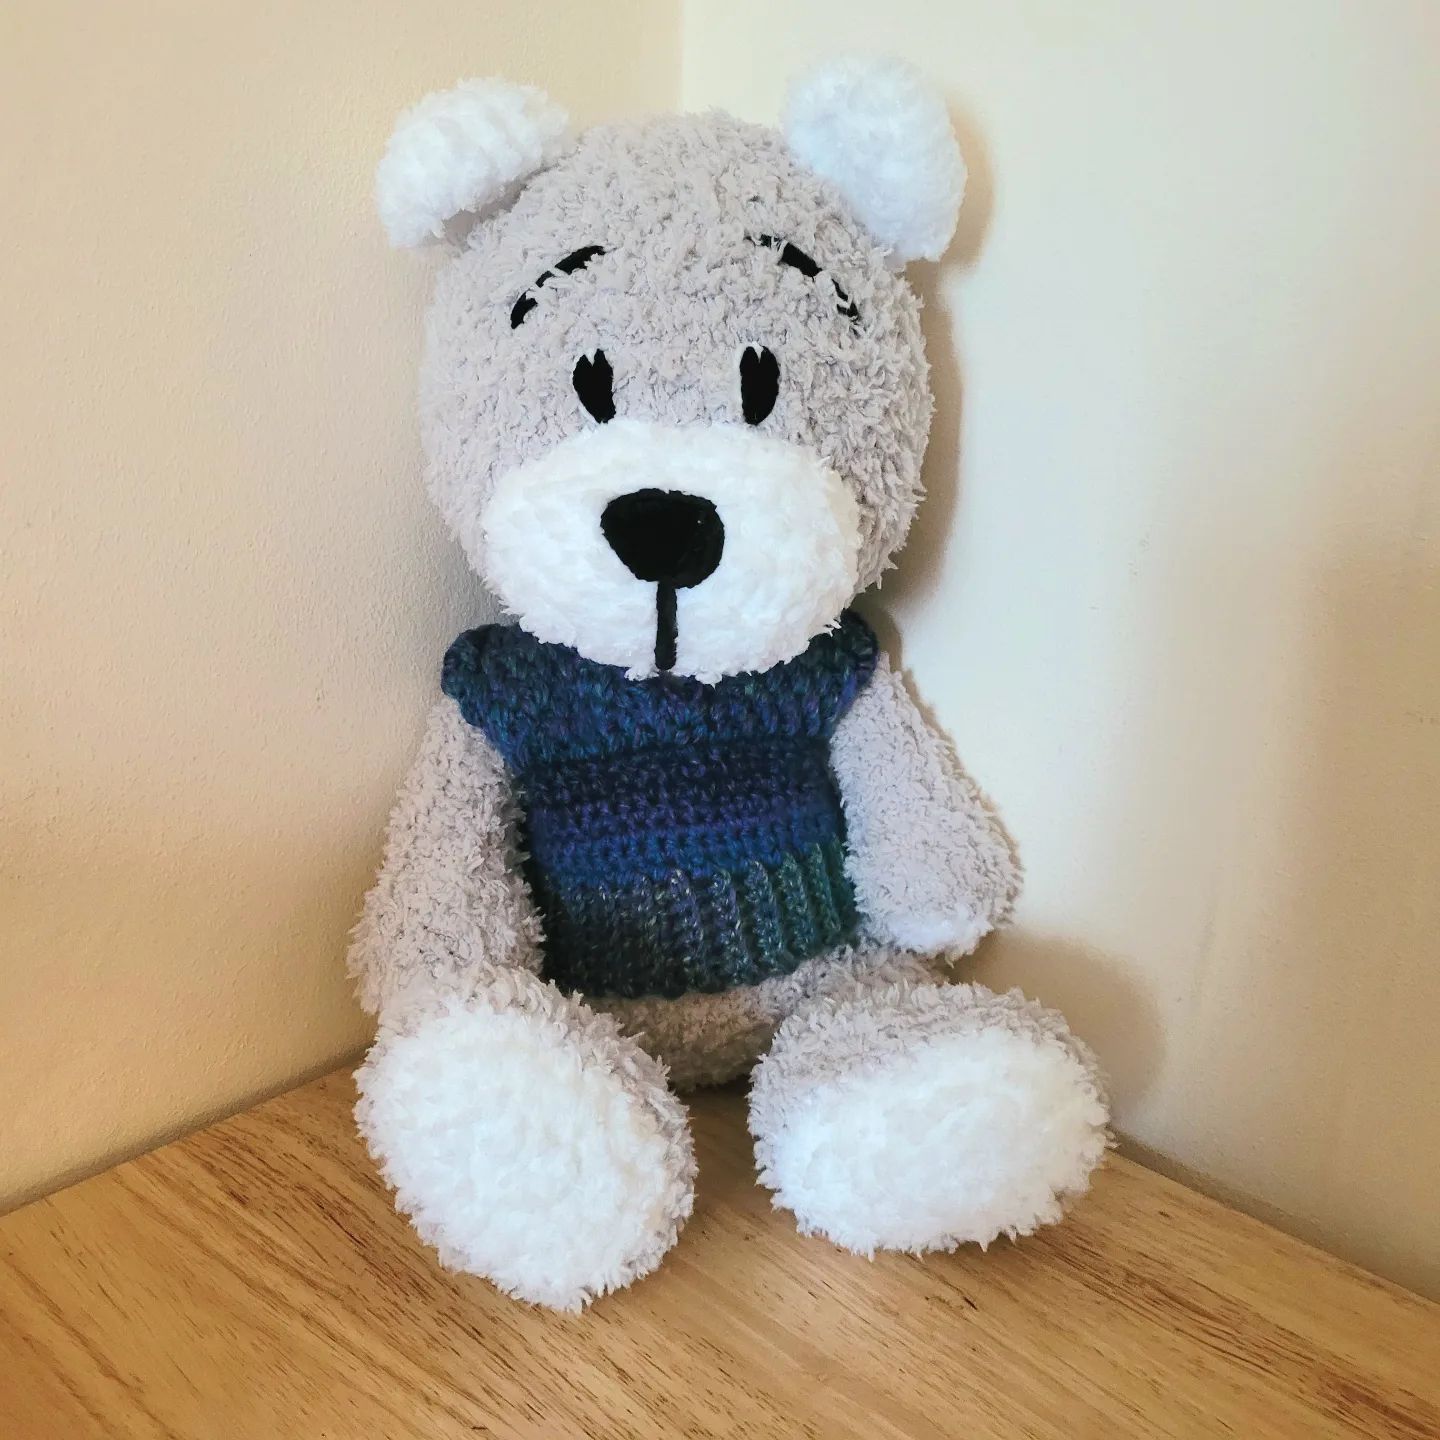 Crochet Amigurumi Teddy Bear Free Pattern – Amigurumi